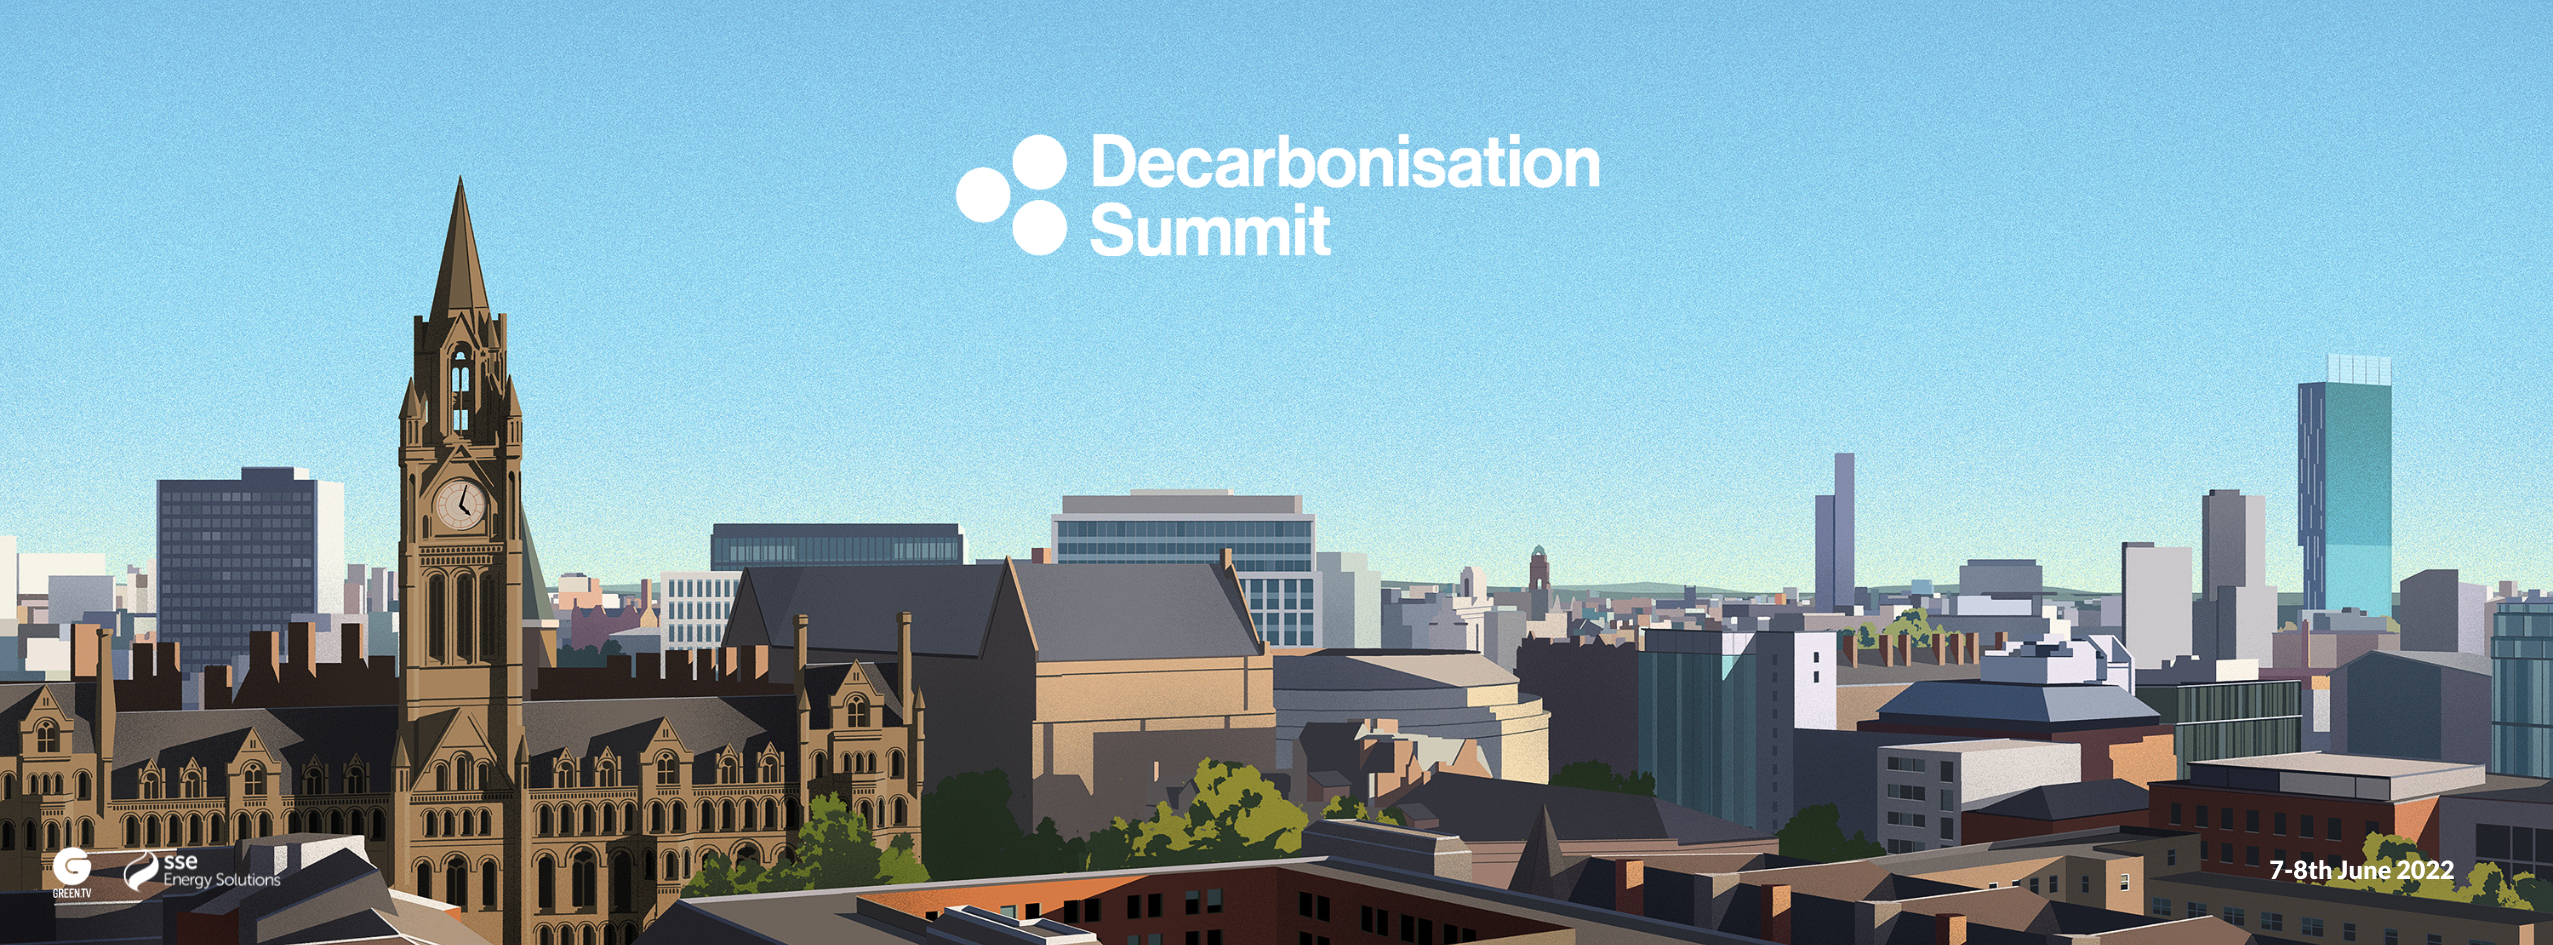 Decarbonisation Summit 2022 Banner.png